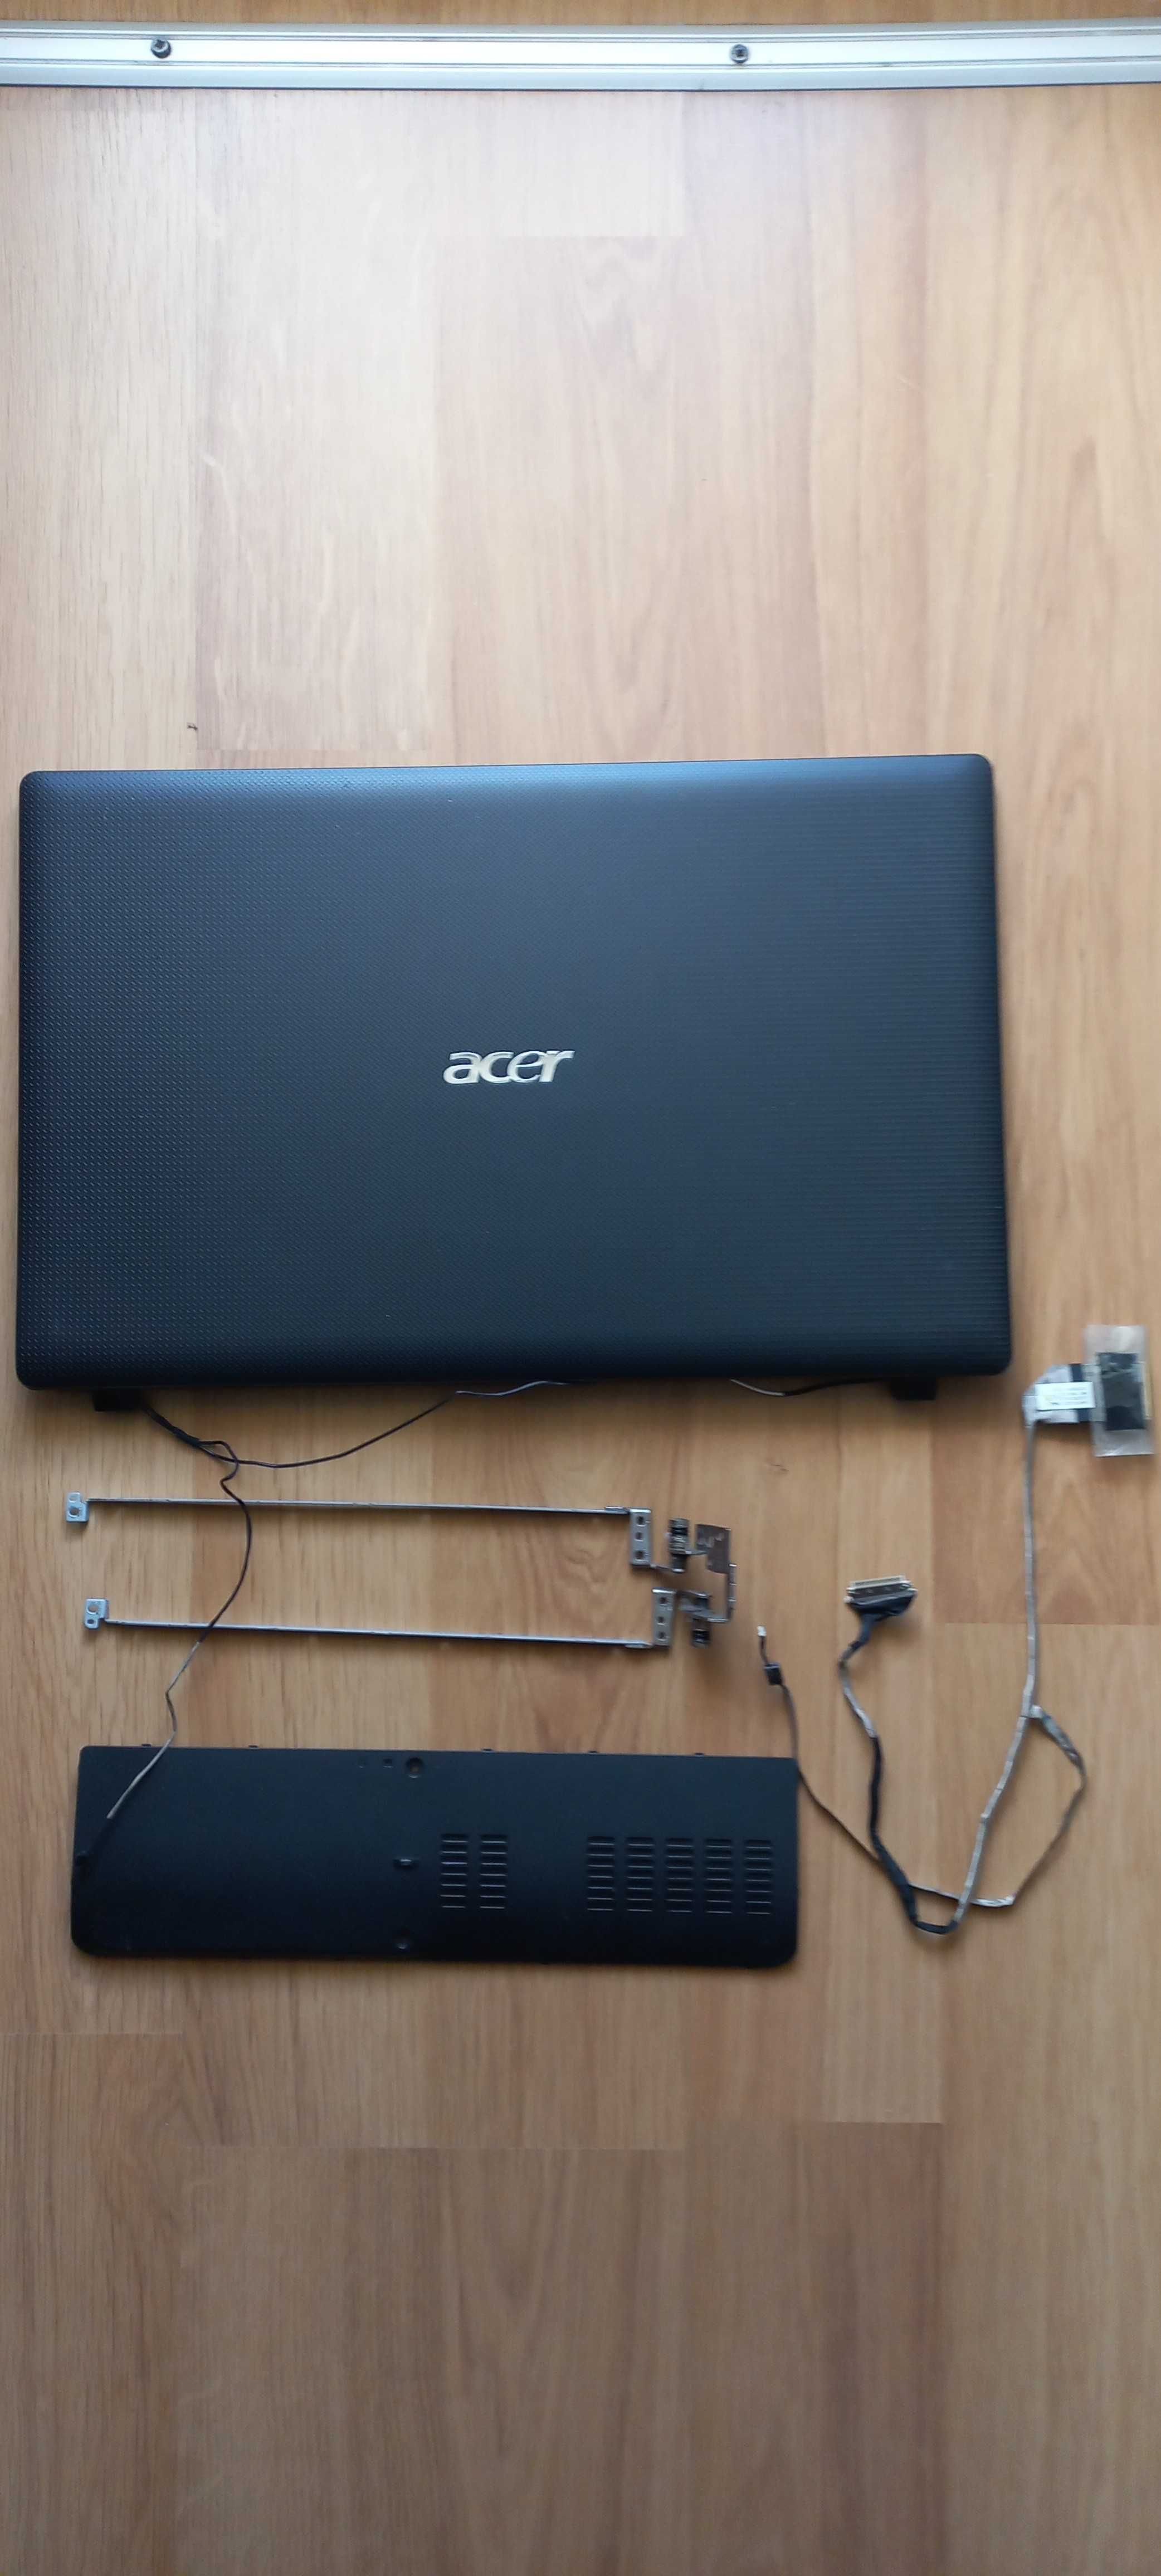 Ноутбук Acer Aspire 5742  HDD 500 Gb Запчастини ( робочий)